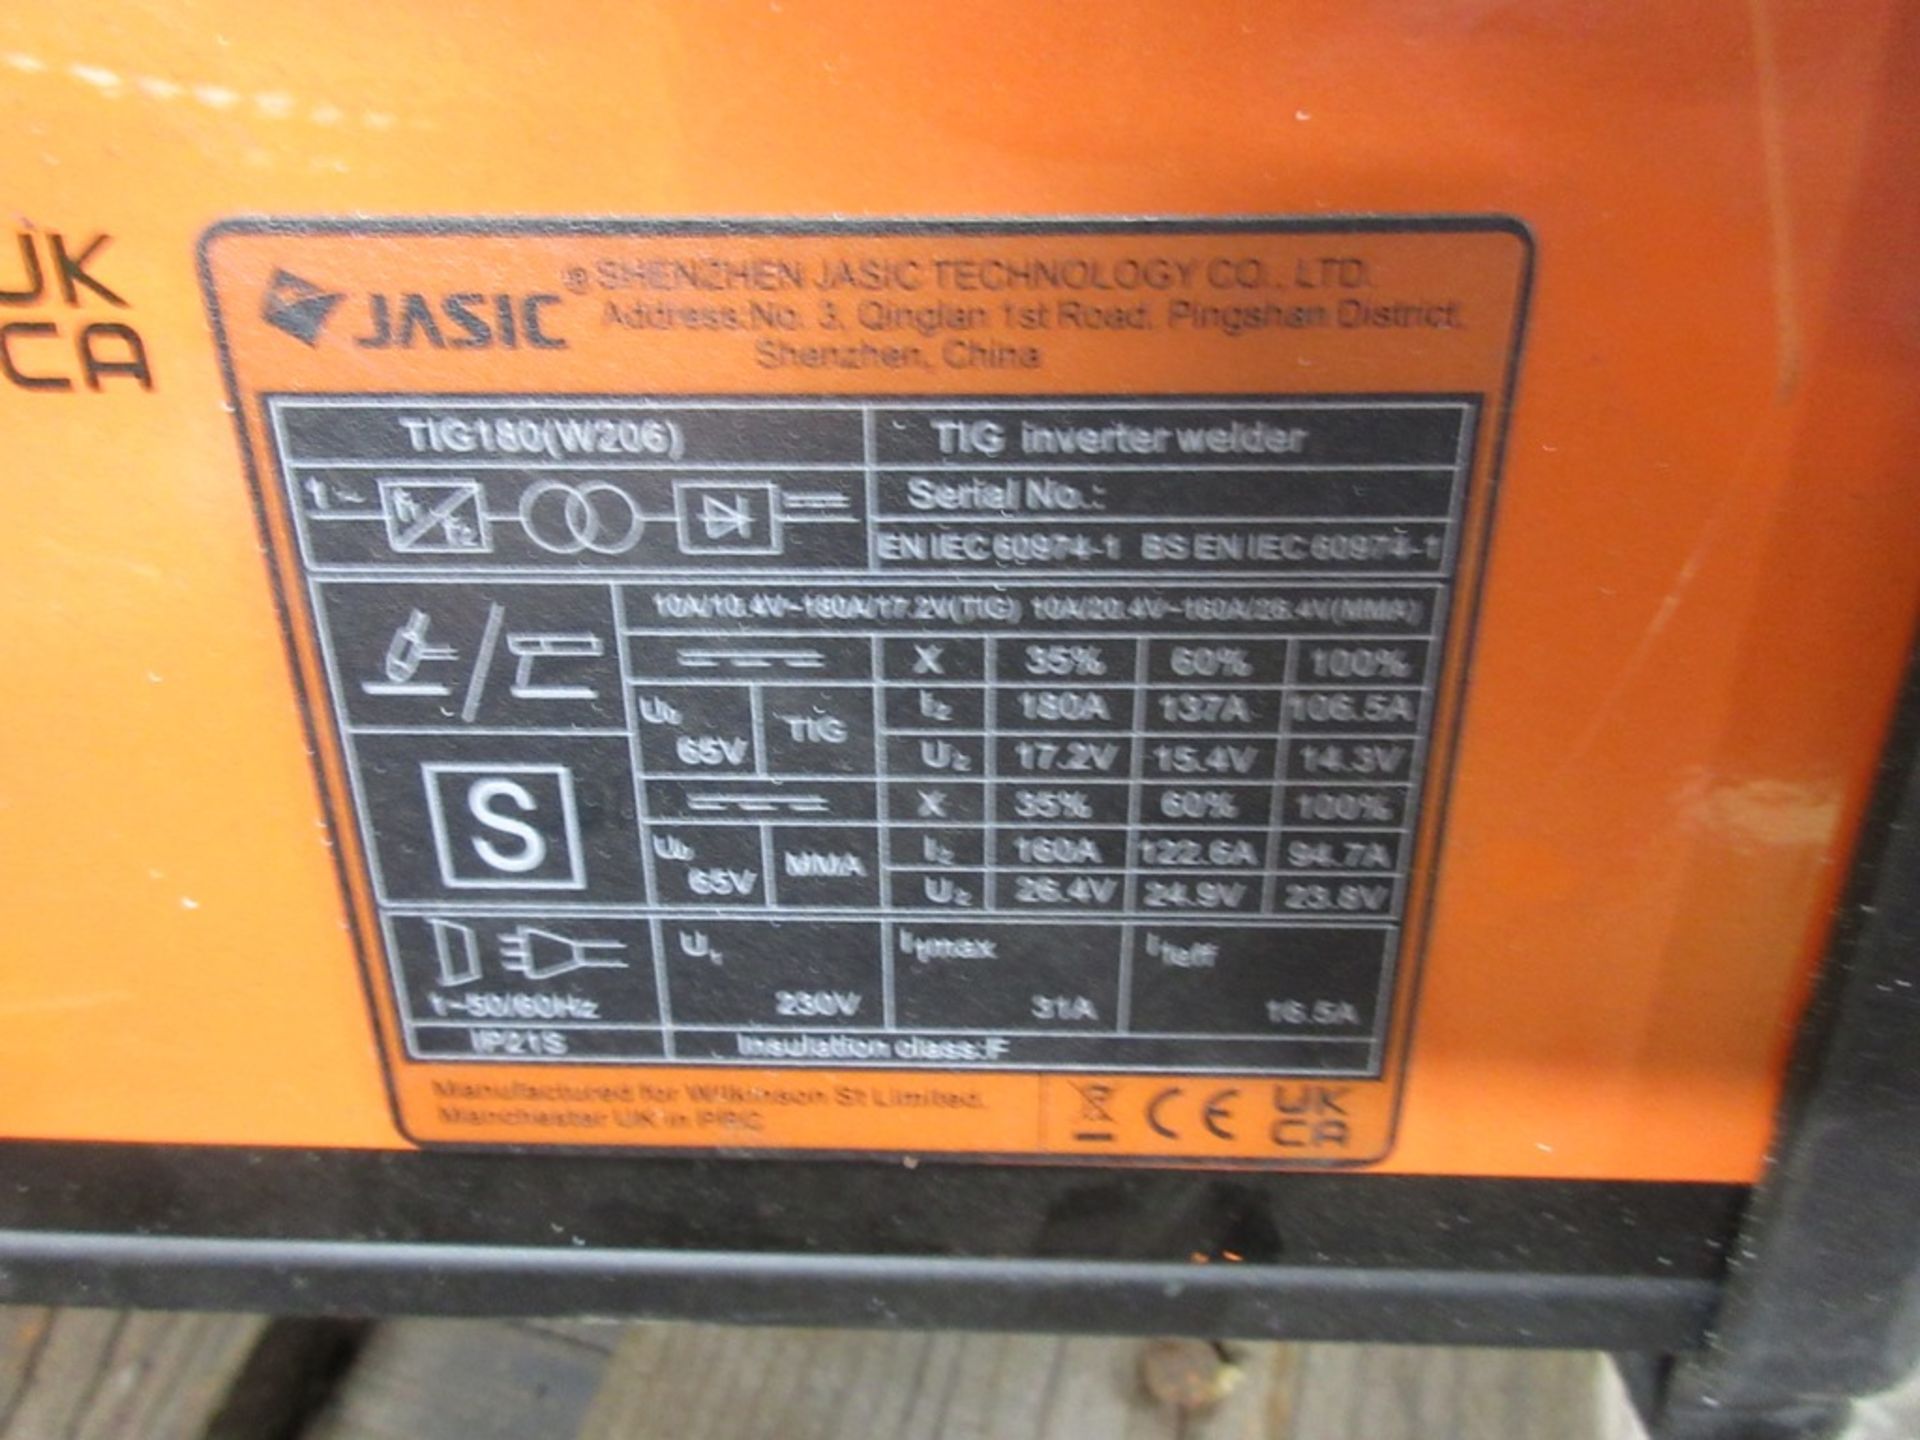 Jasic Pro 180 amp tig welding set, serial no. ENIEC60974-1 - Image 2 of 3